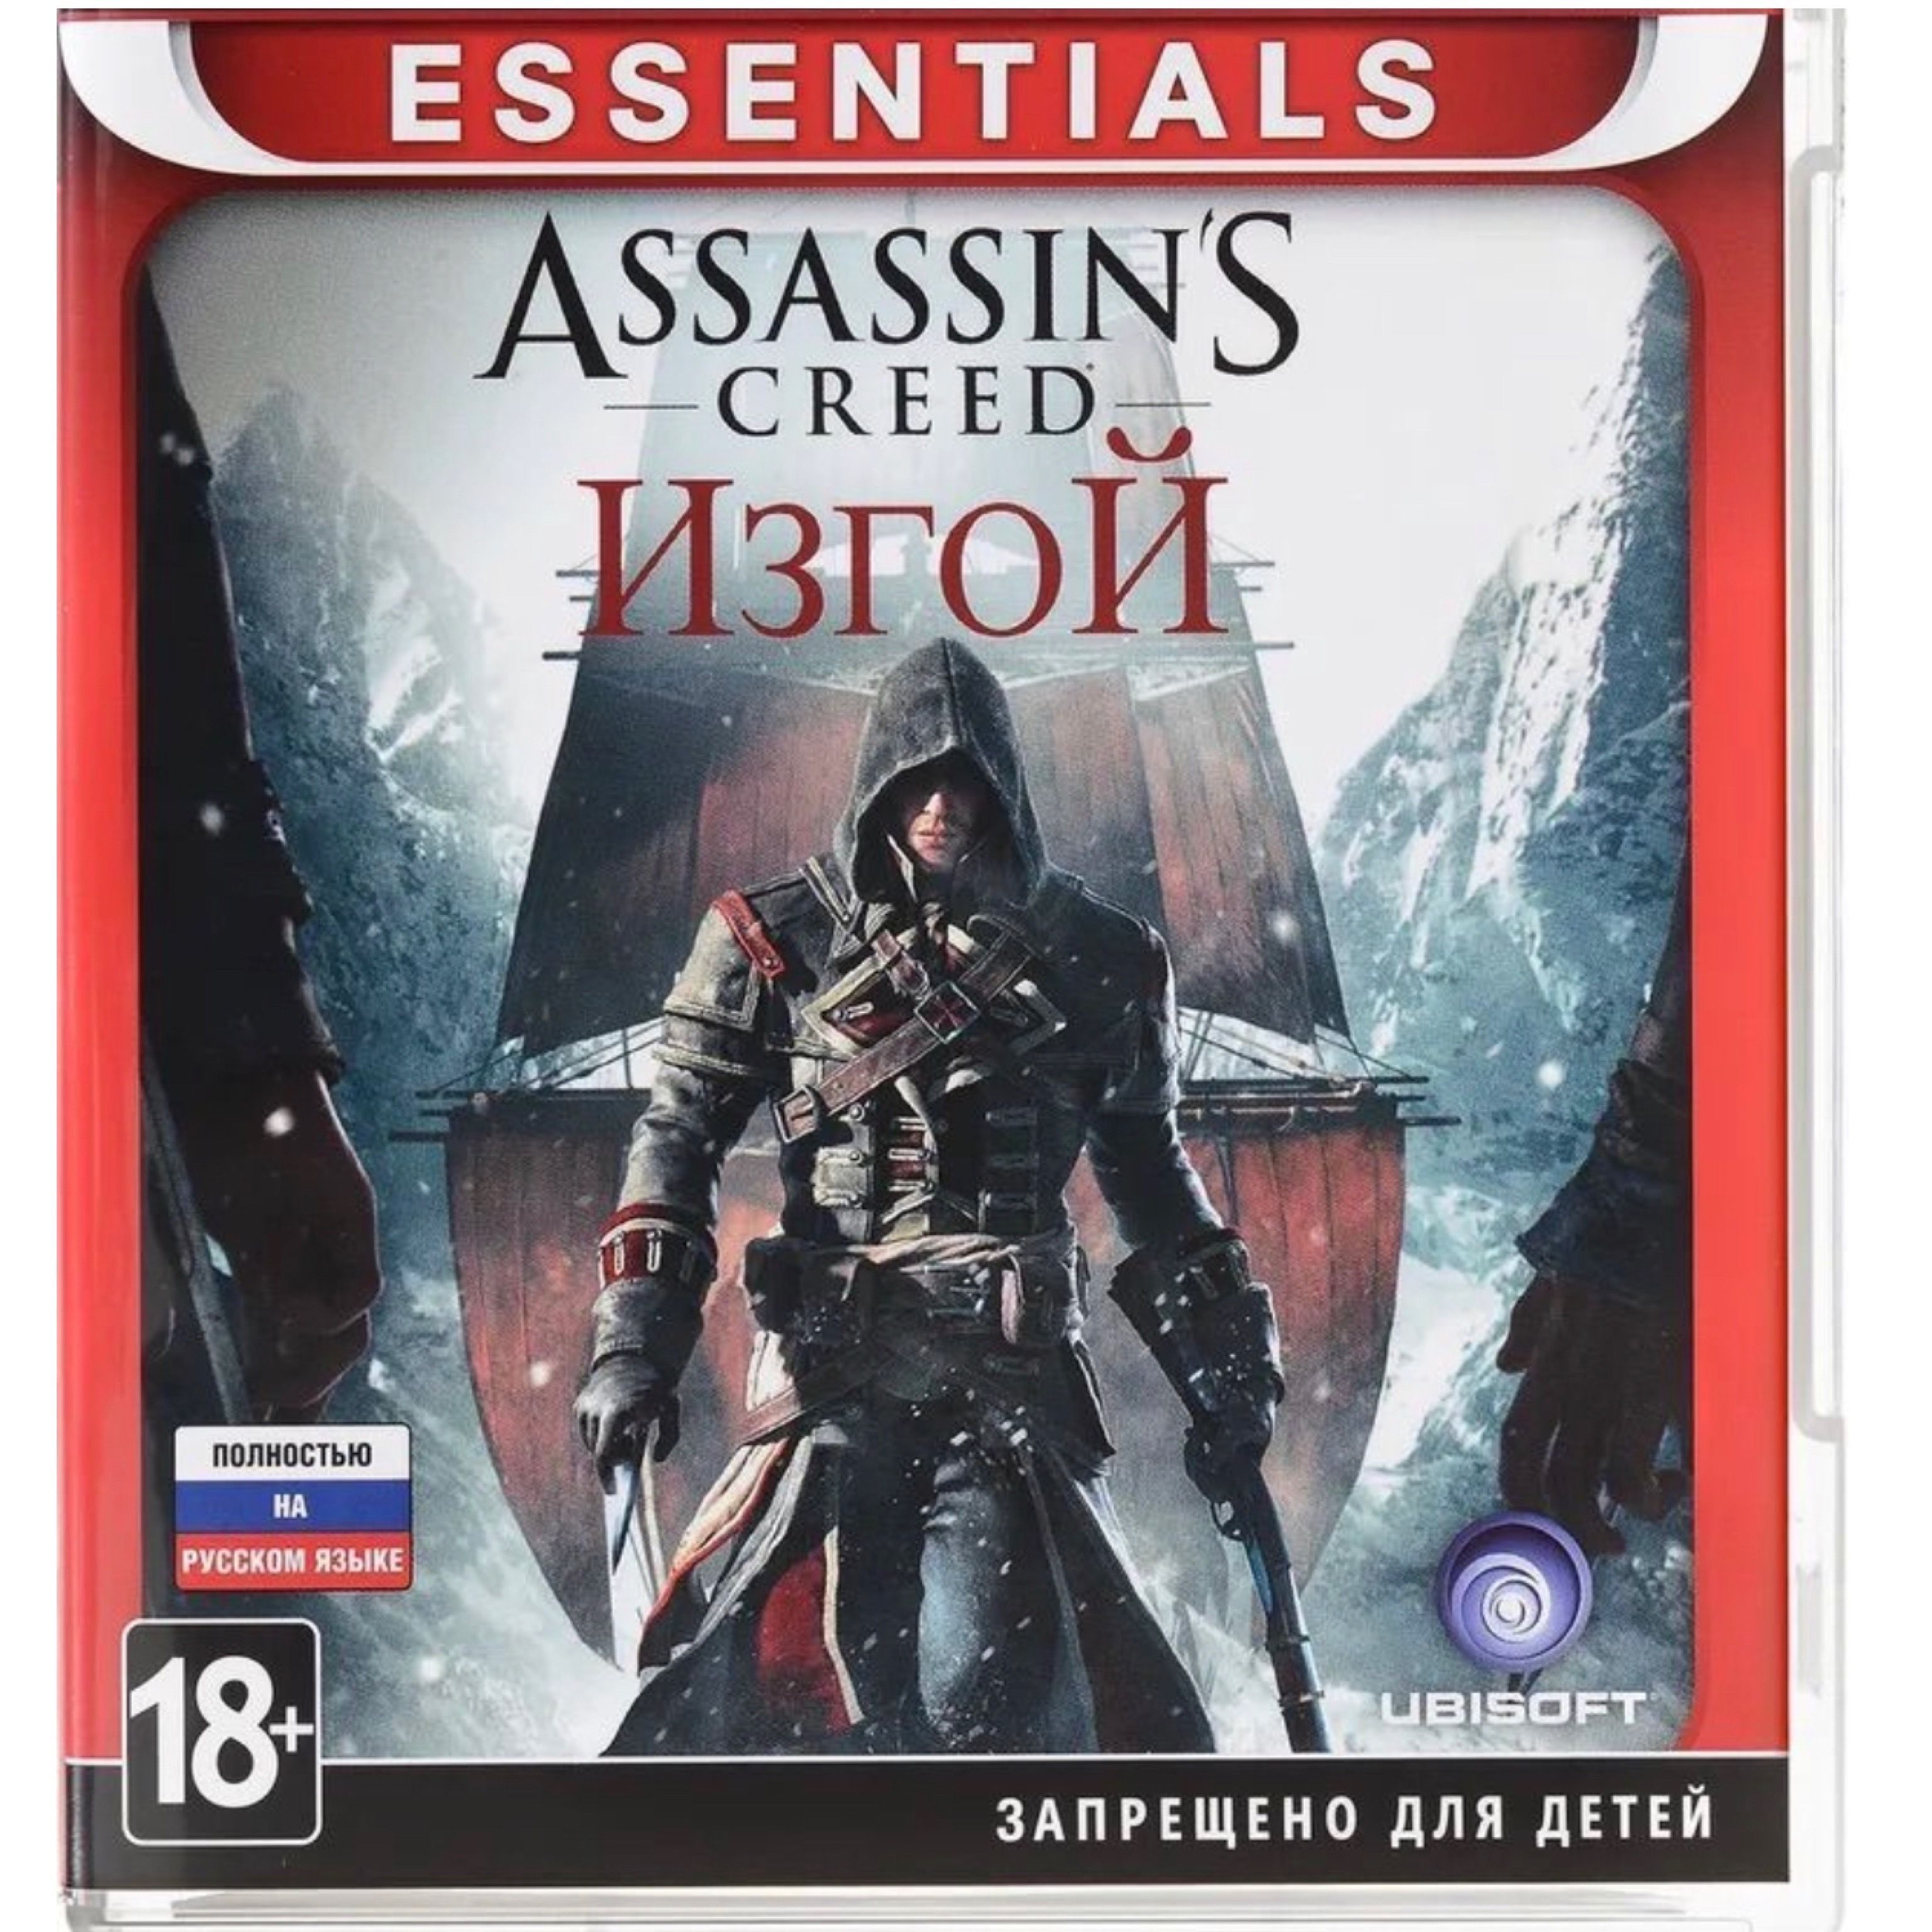 Ассасин на пс 3. Диски на плейстейшен 3 ассасин Крид. Игры на PLAYSTATION 3 Assassins Creed. Игра для ps3 Assassin's Creed (Essentials) обложка.